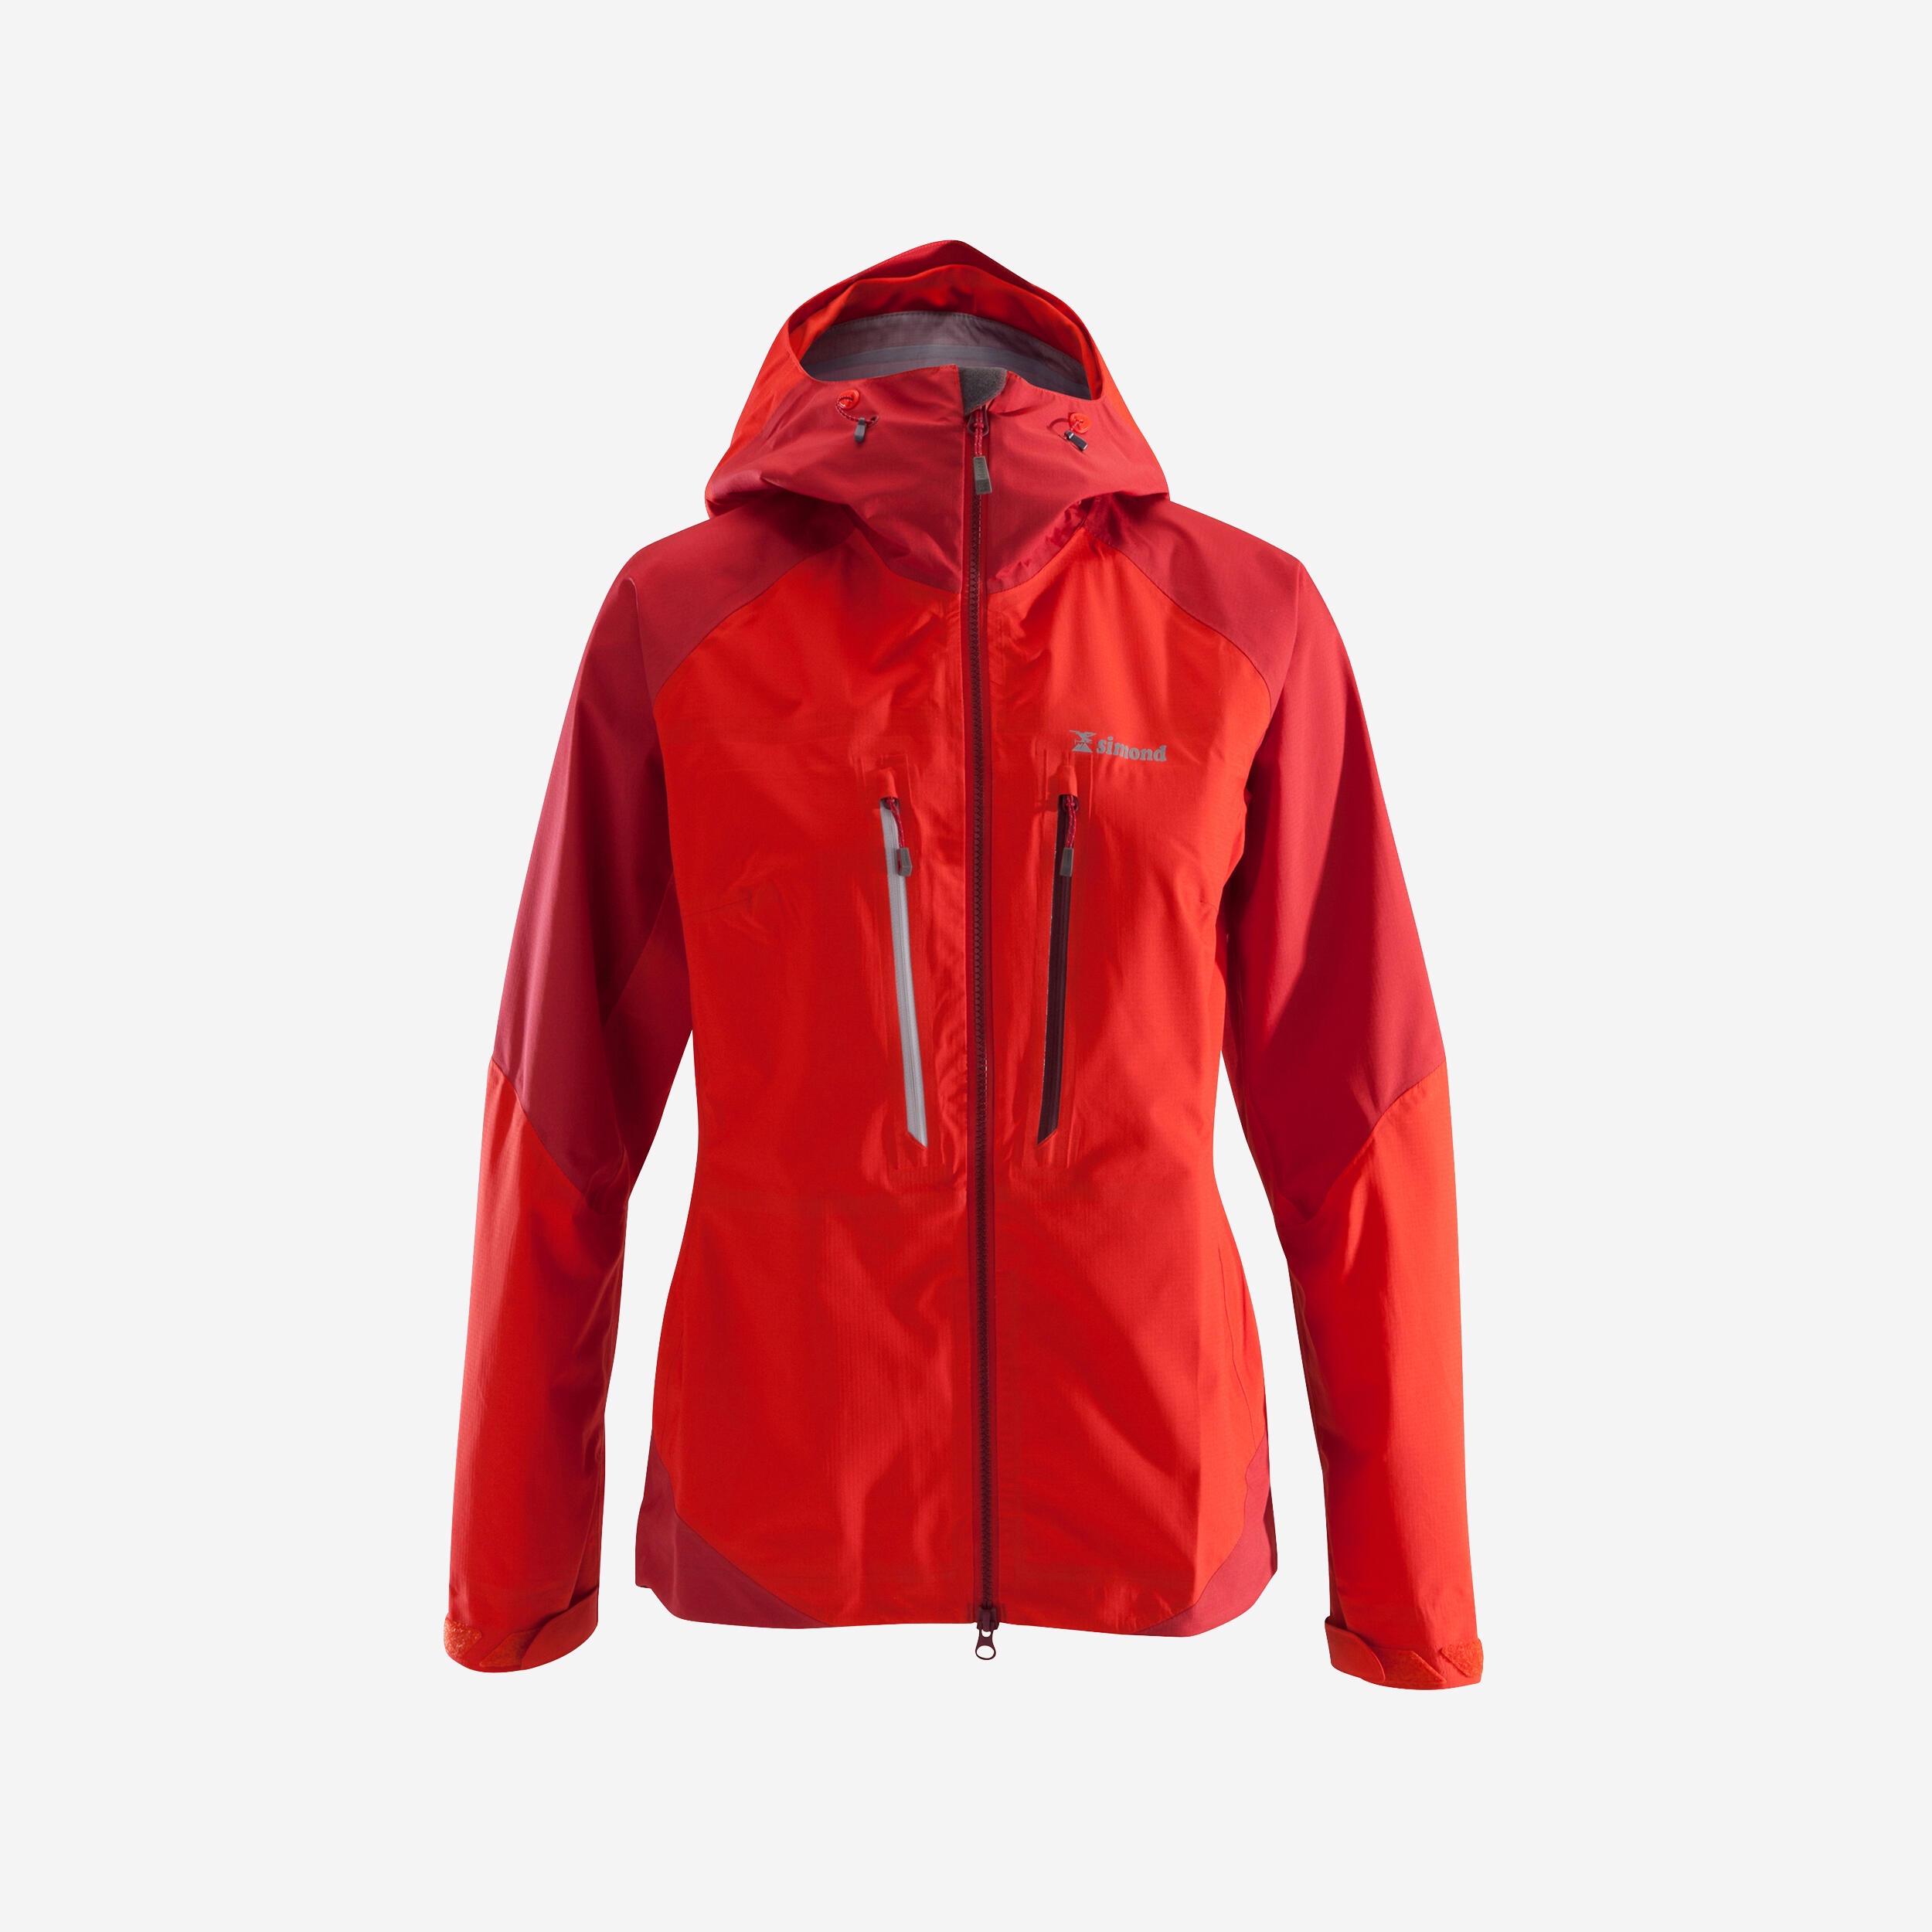 Women's Mountaineering Waterproof Jacket - Alpinism Light Red 1/8